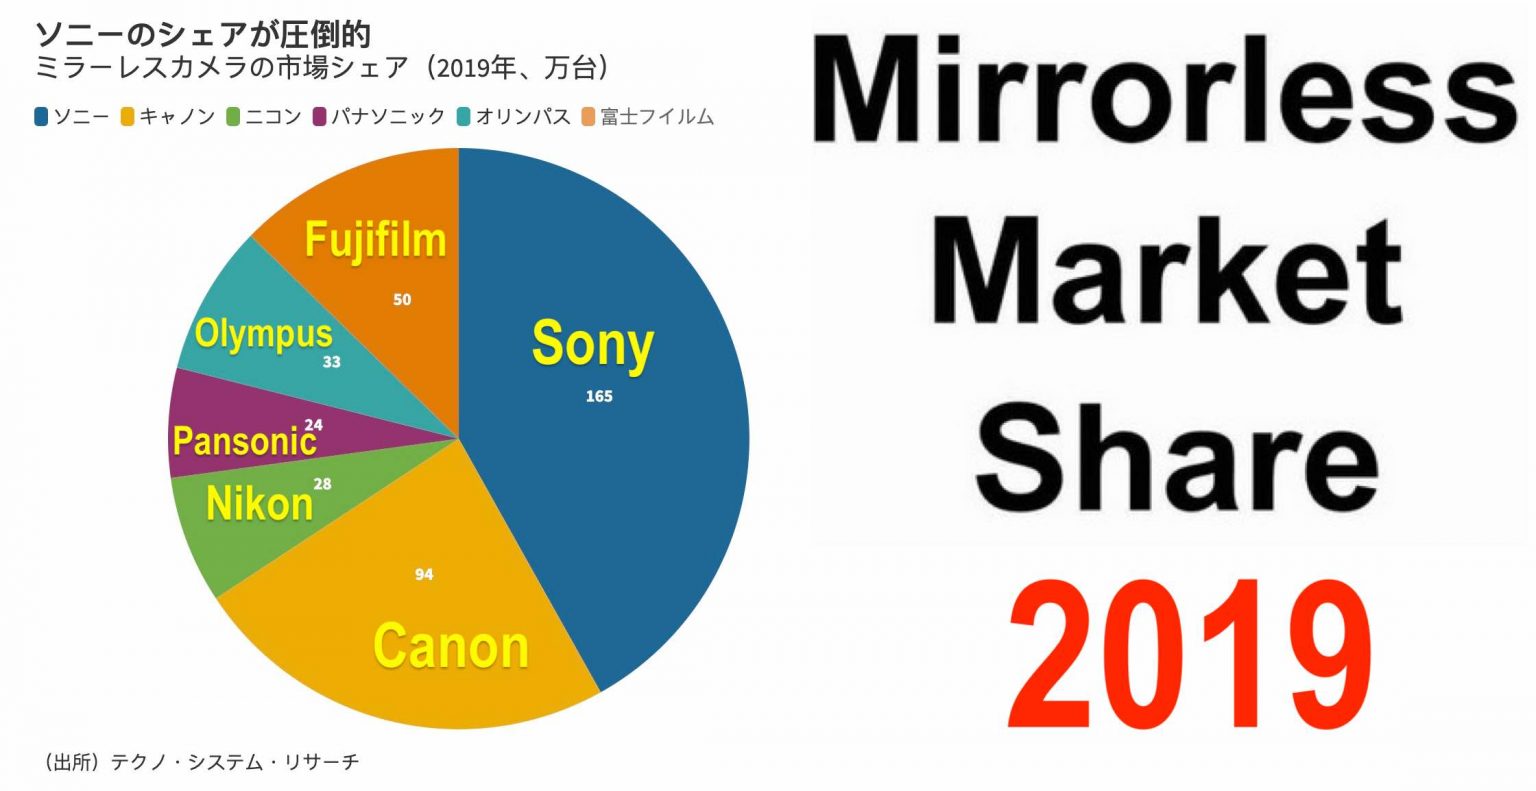 Mirrorless Camera Market Share 2019 Fujifilm Third after Sony and